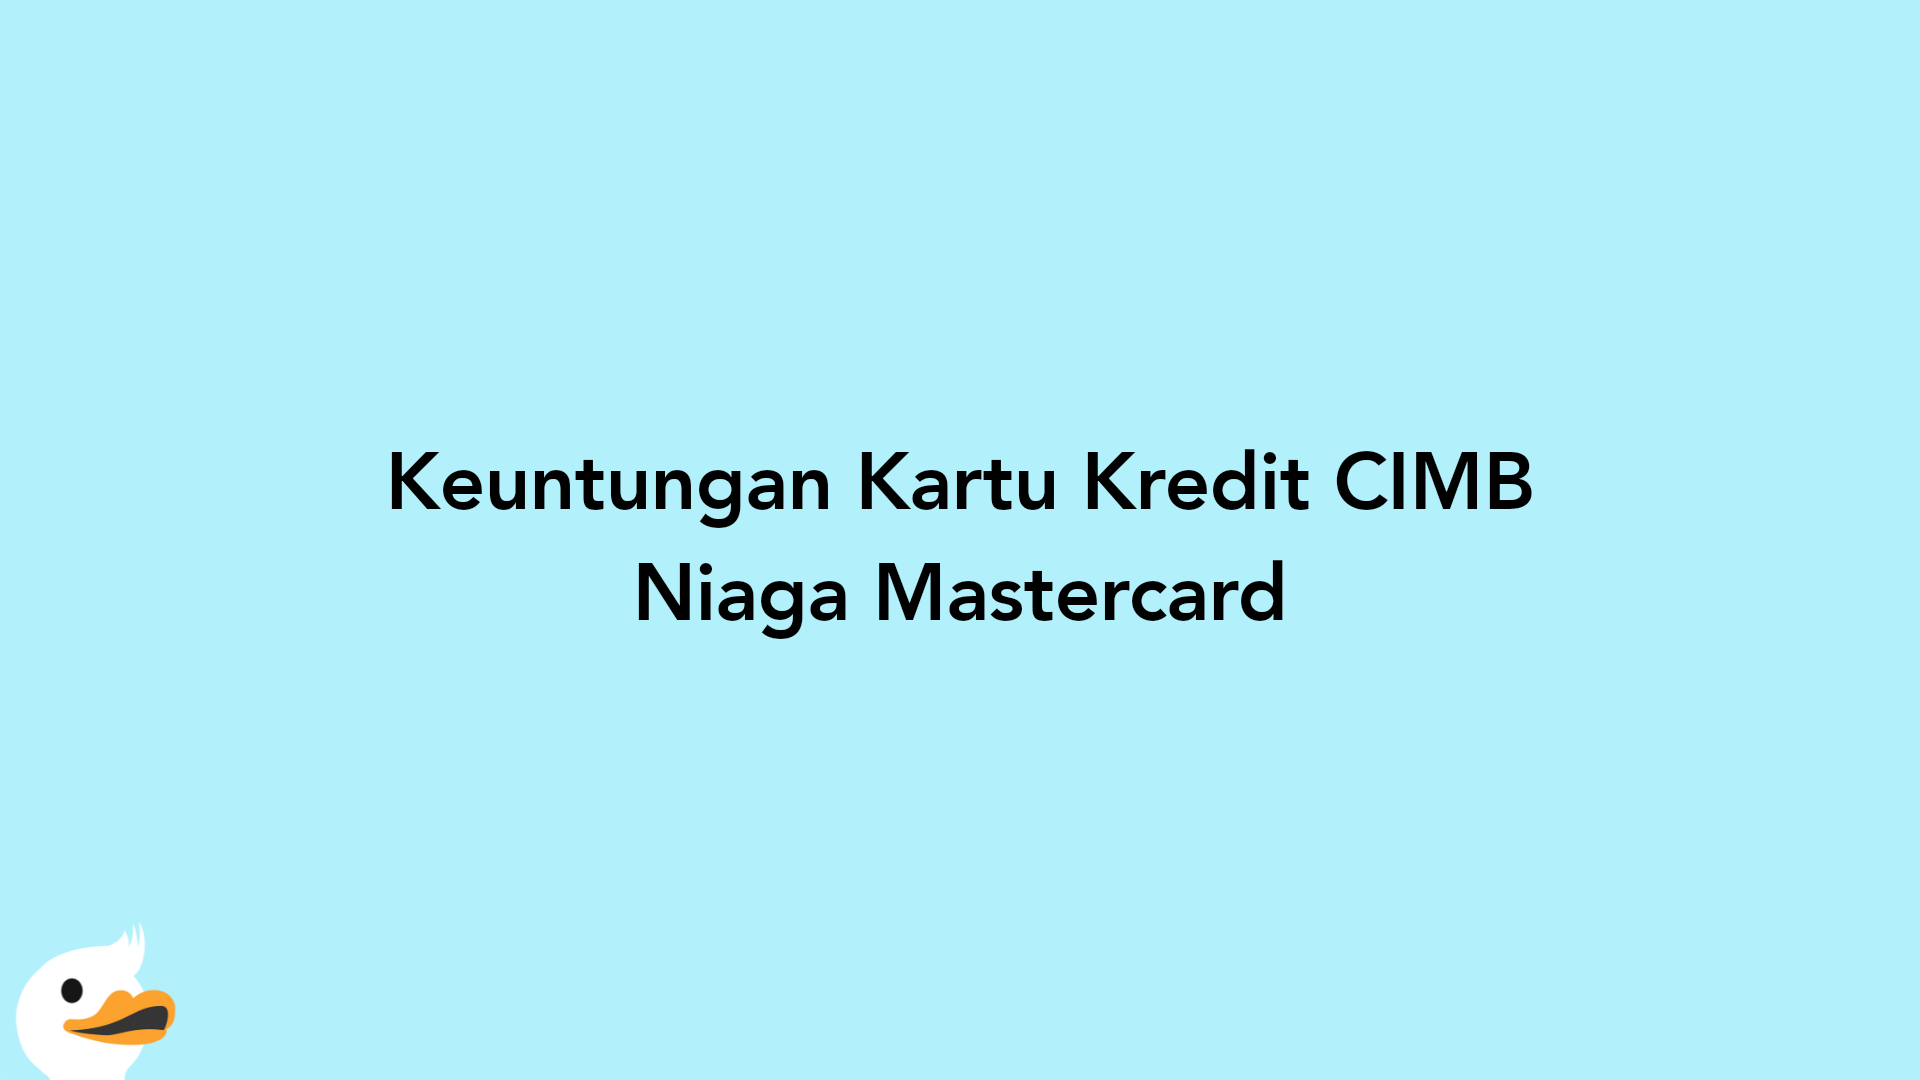 Keuntungan Kartu Kredit CIMB Niaga Mastercard